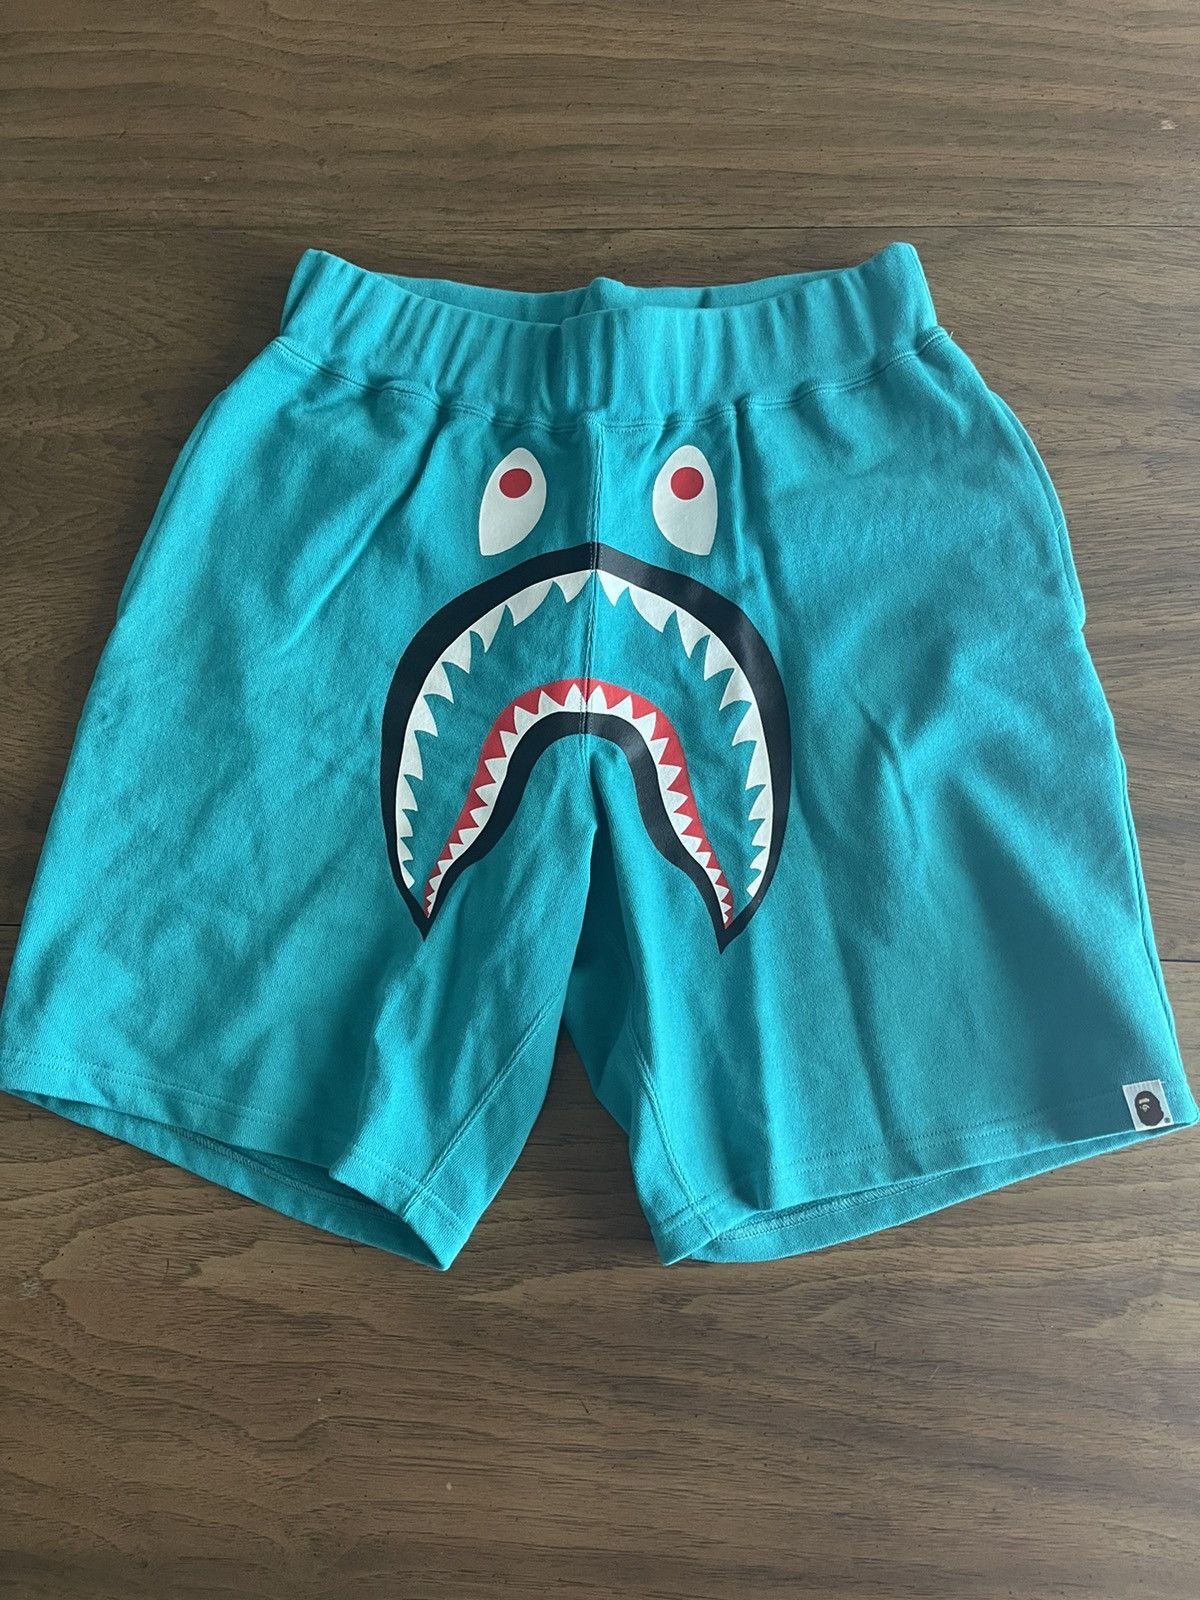 Bape Shark Sweatshorts Size US 32 / EU 48 - 1 Preview